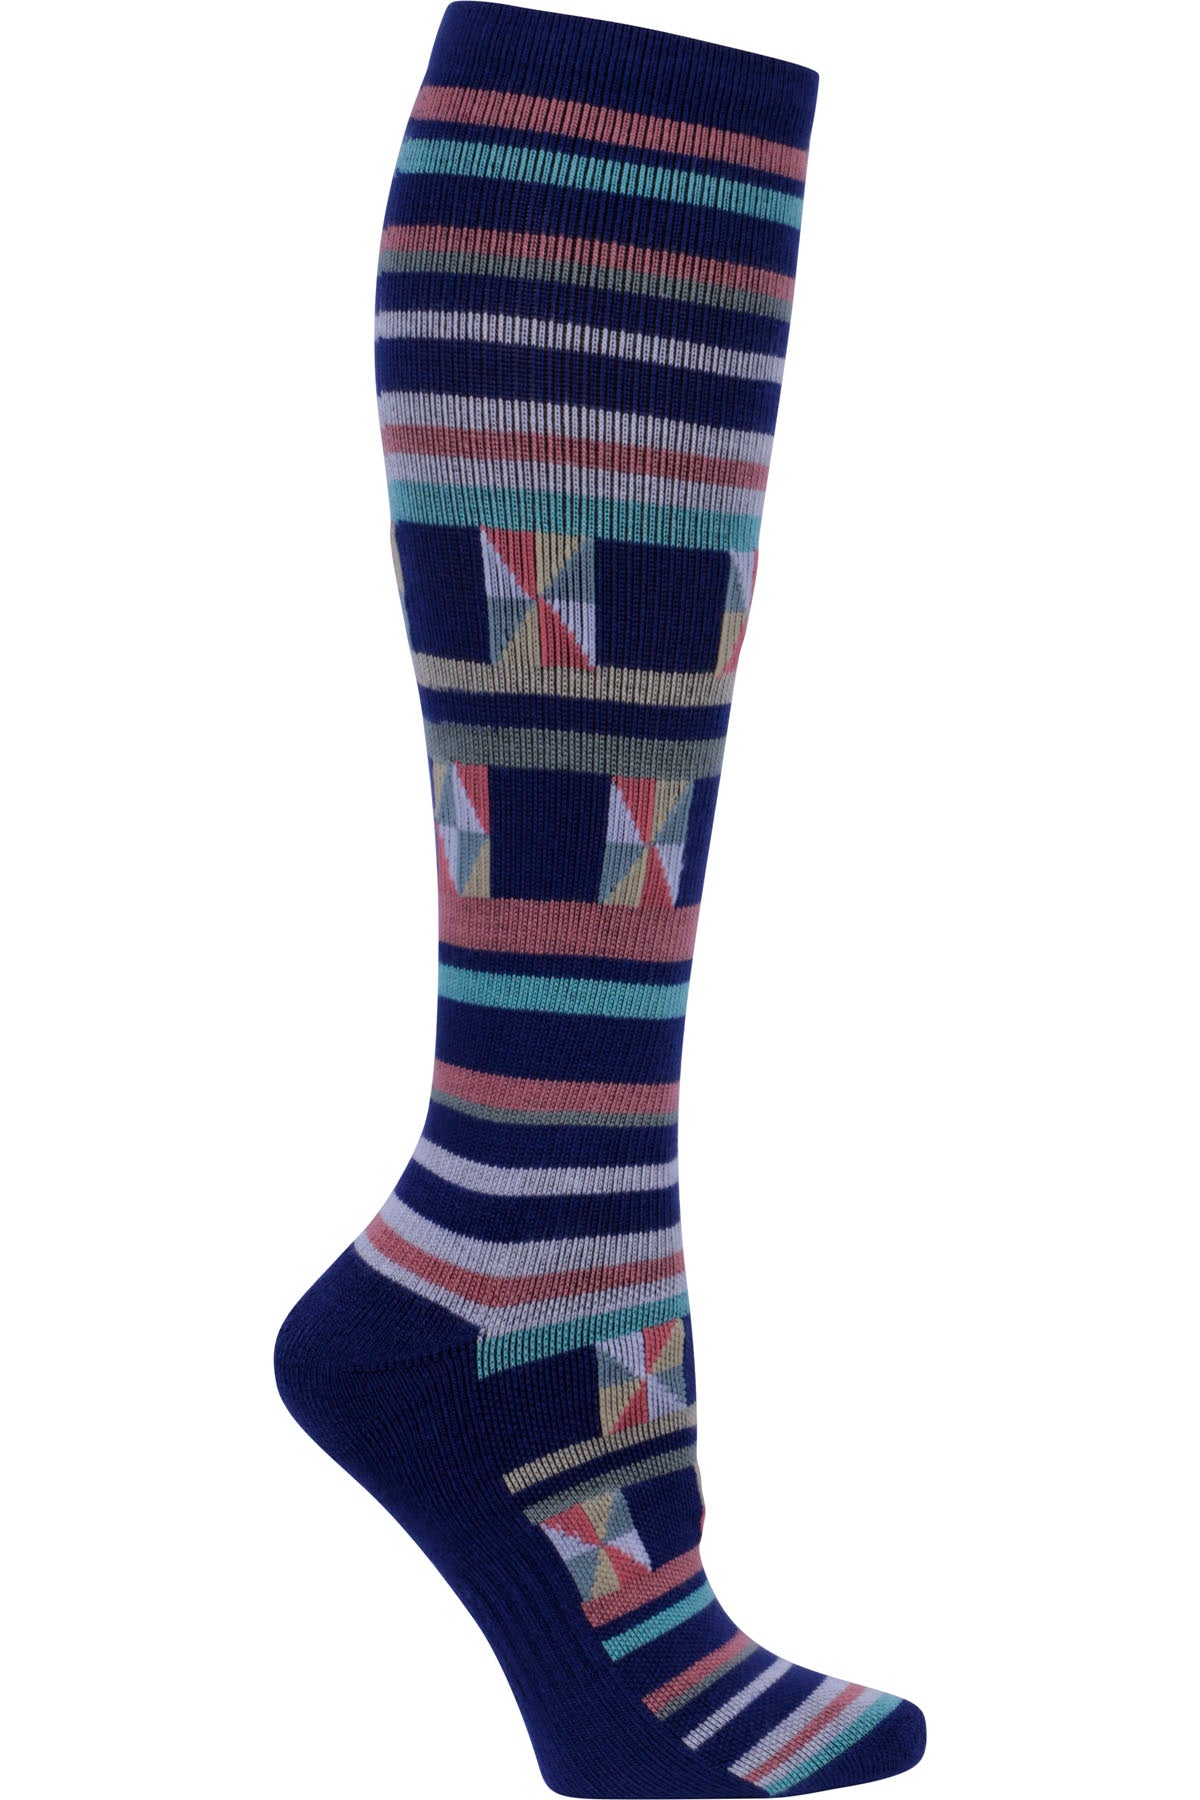 Knee High Compression Socks 15-20 mmHg Women's Compression Socks Cherokee Legwear Serene S/M 